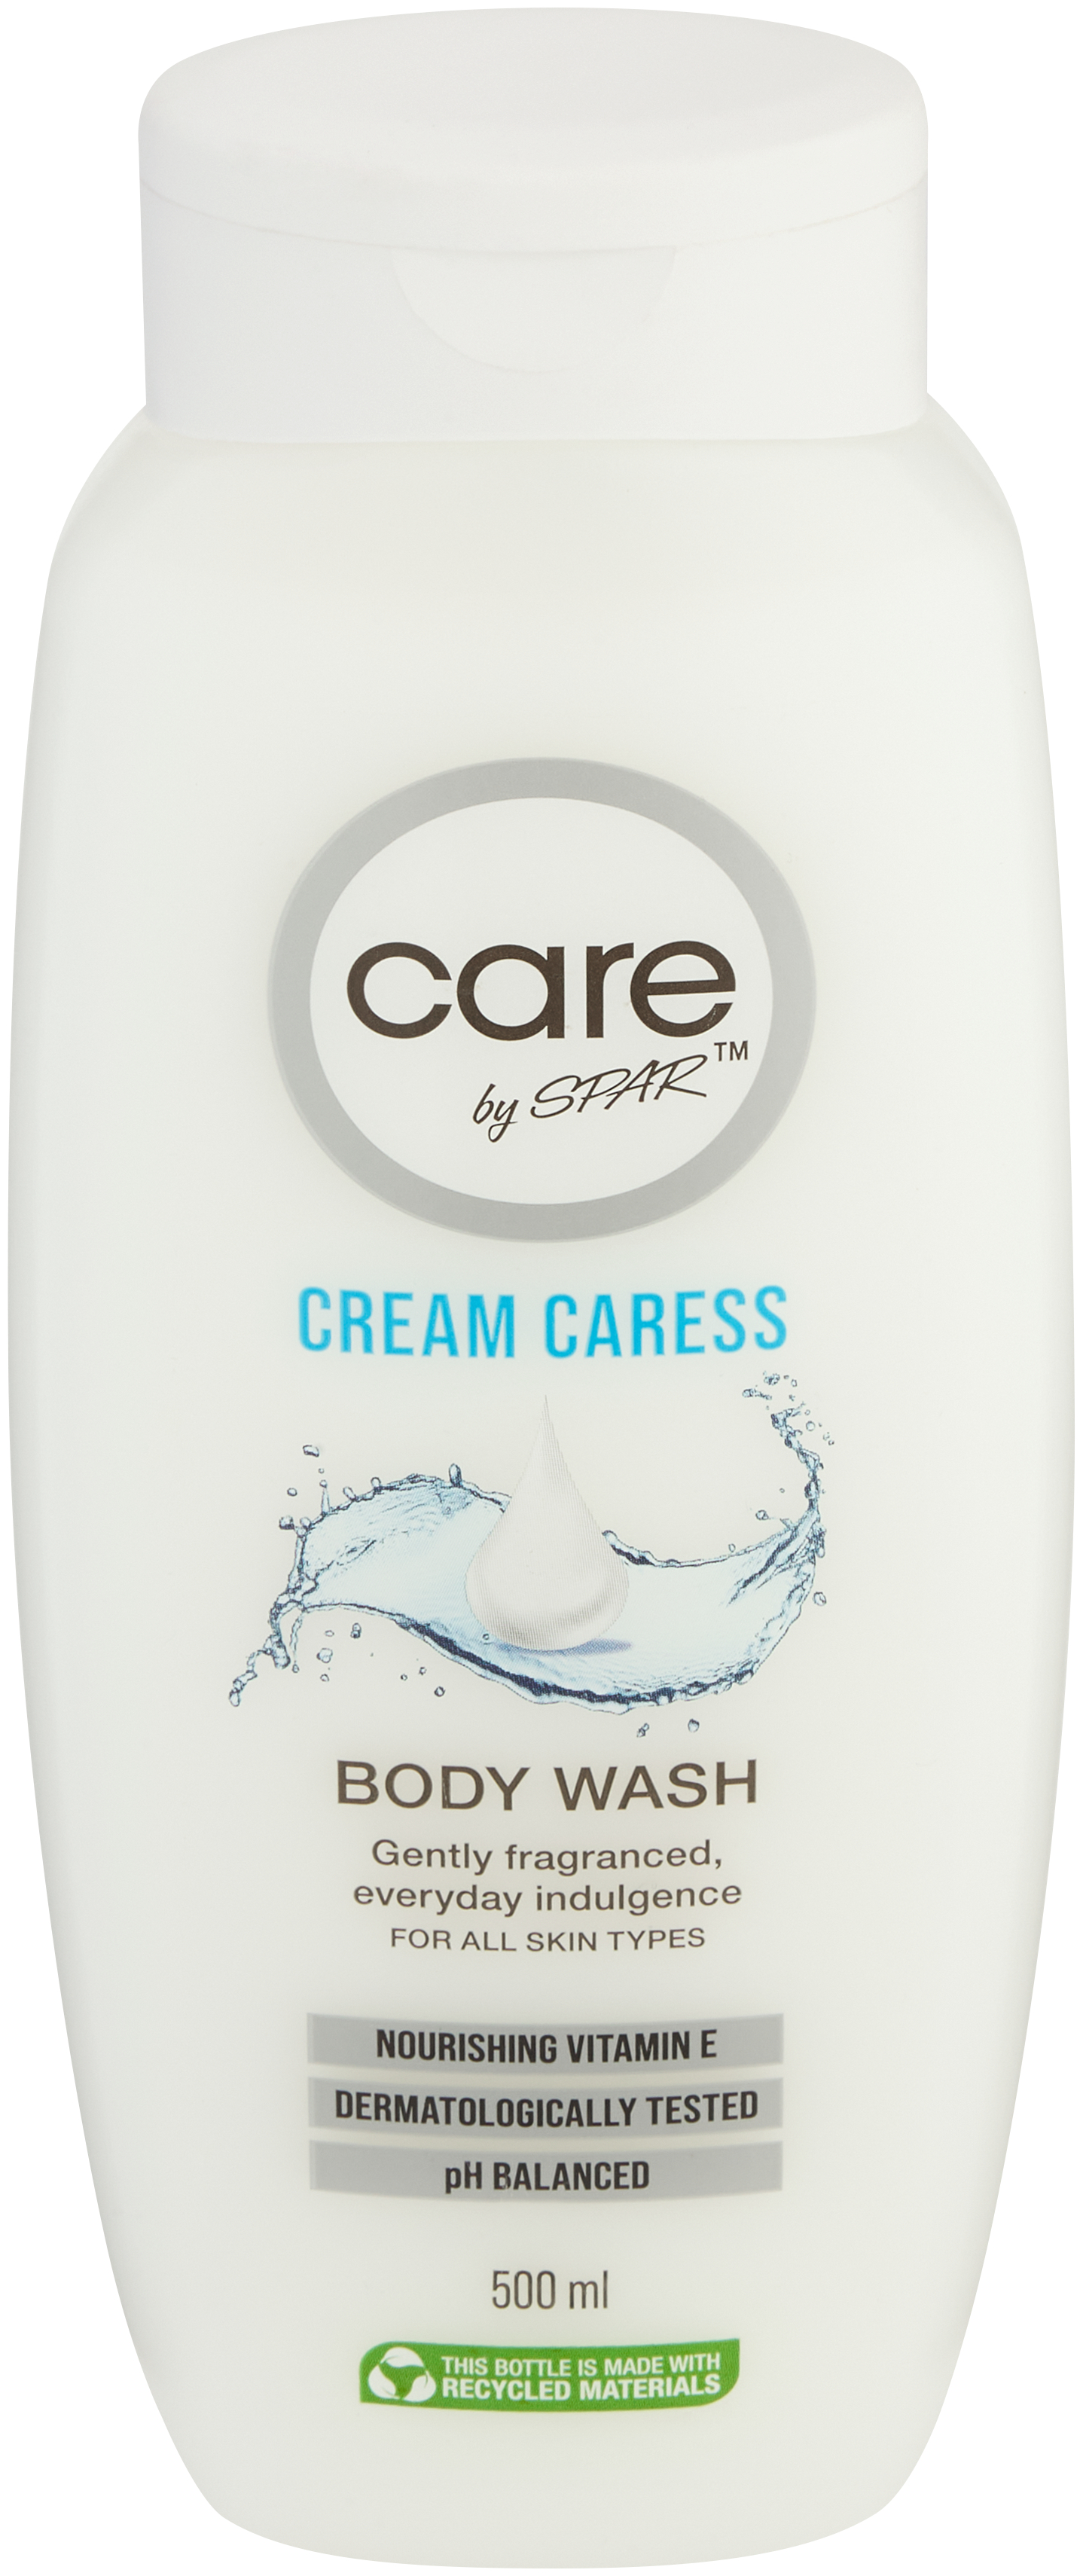 care by spar body wash cream caress